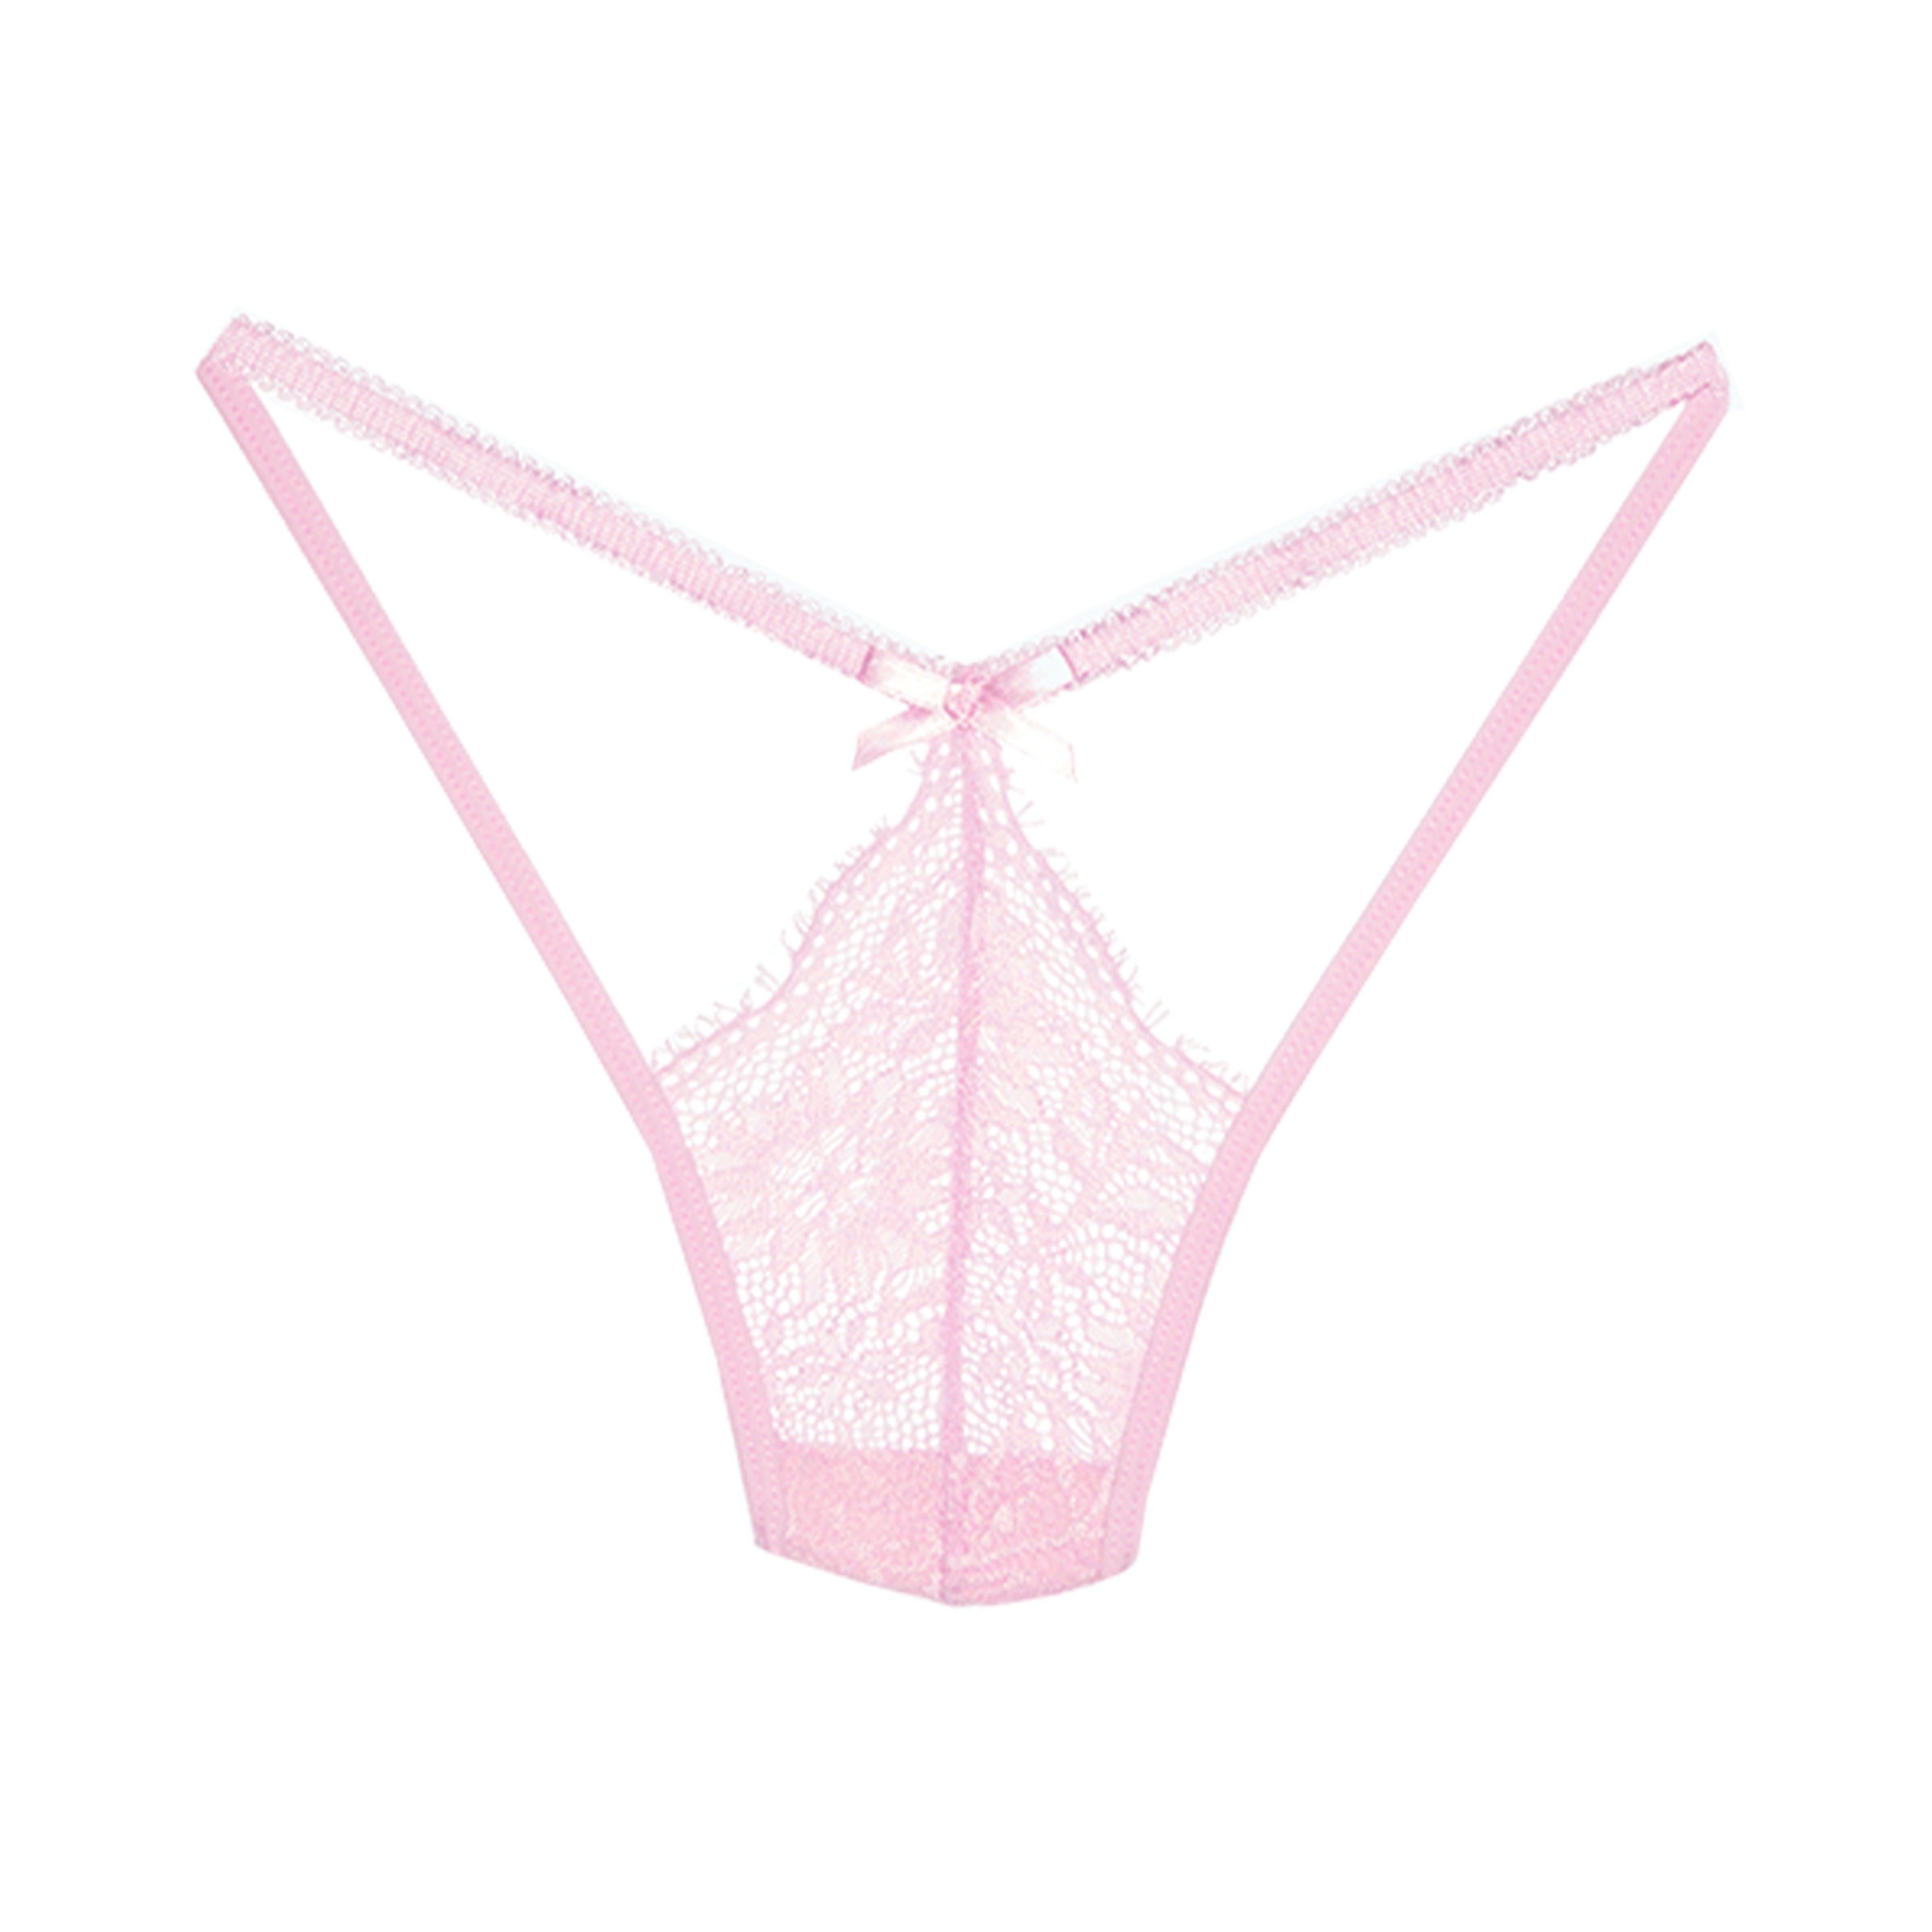 V-Shape Lace Strappy G-string Baby Pink O/S